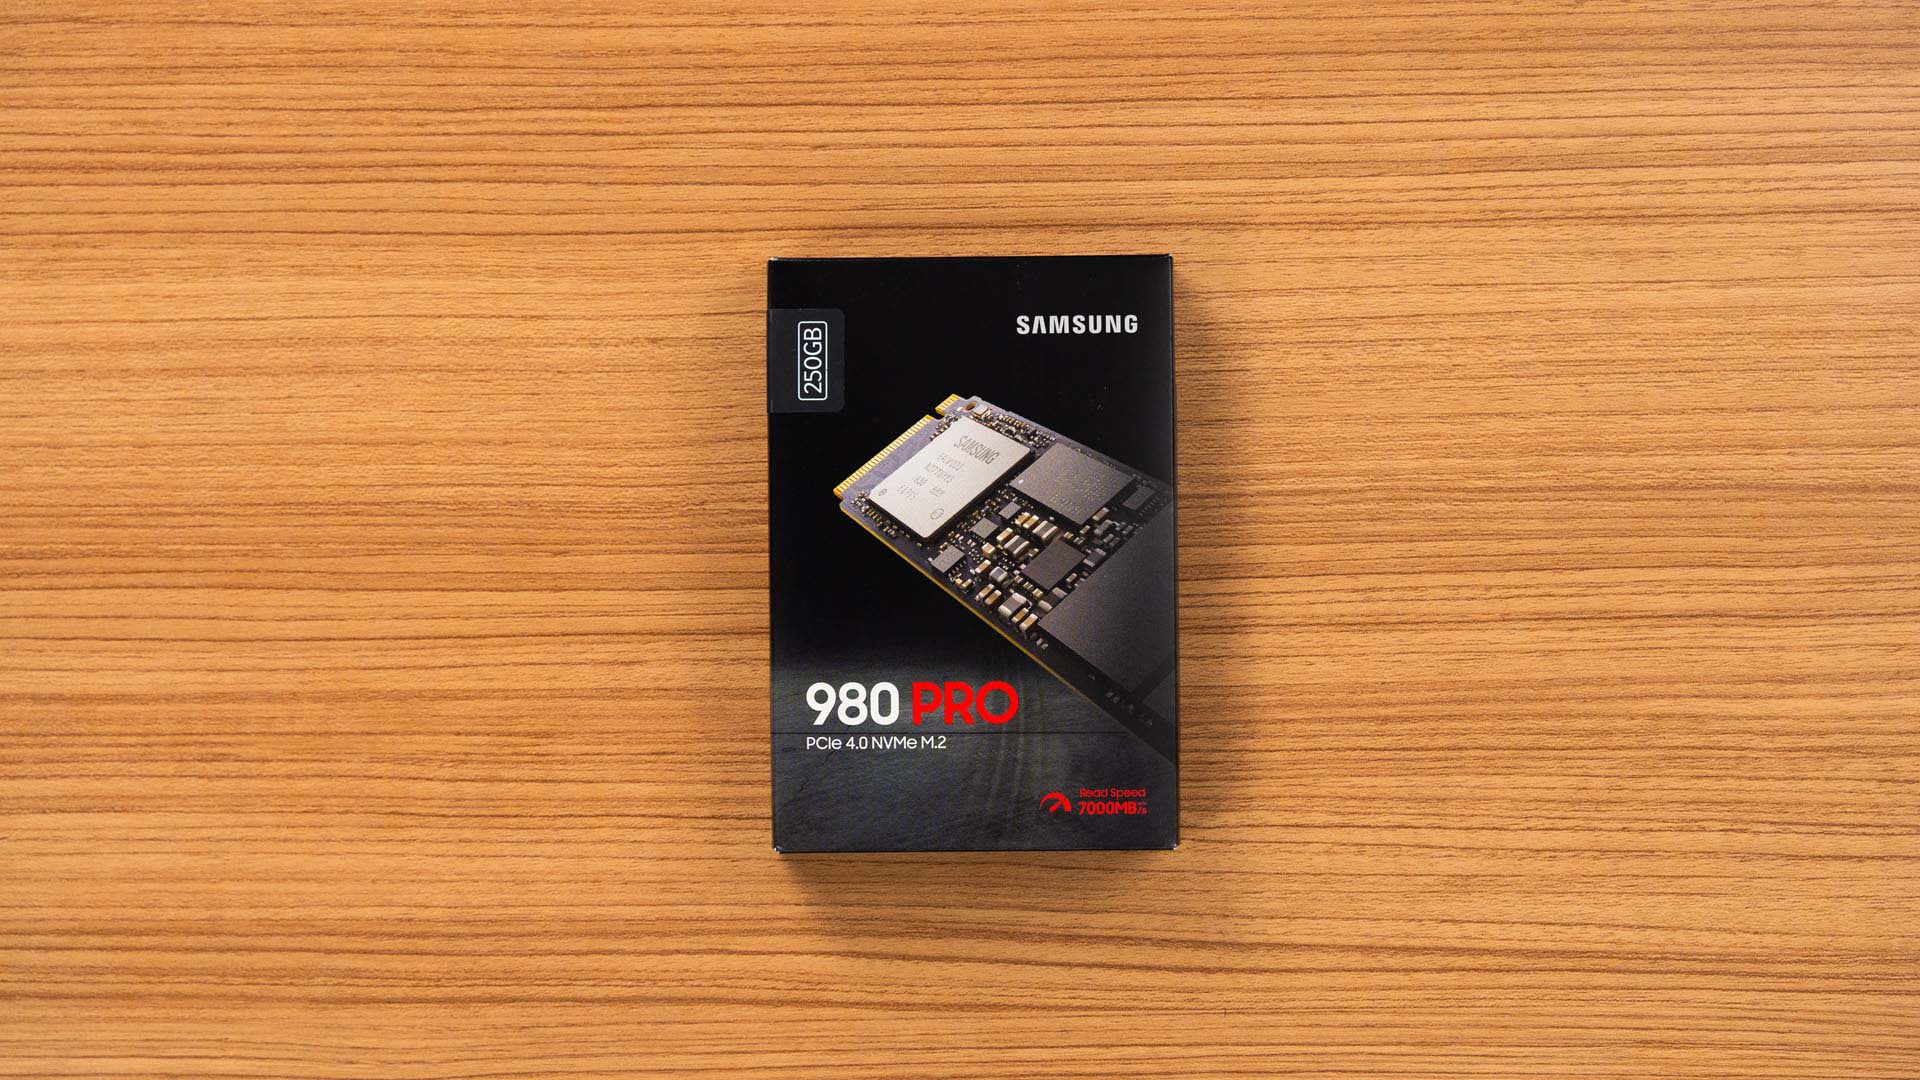 980 PRO PCle 4.0 NVMe M.2 SSD